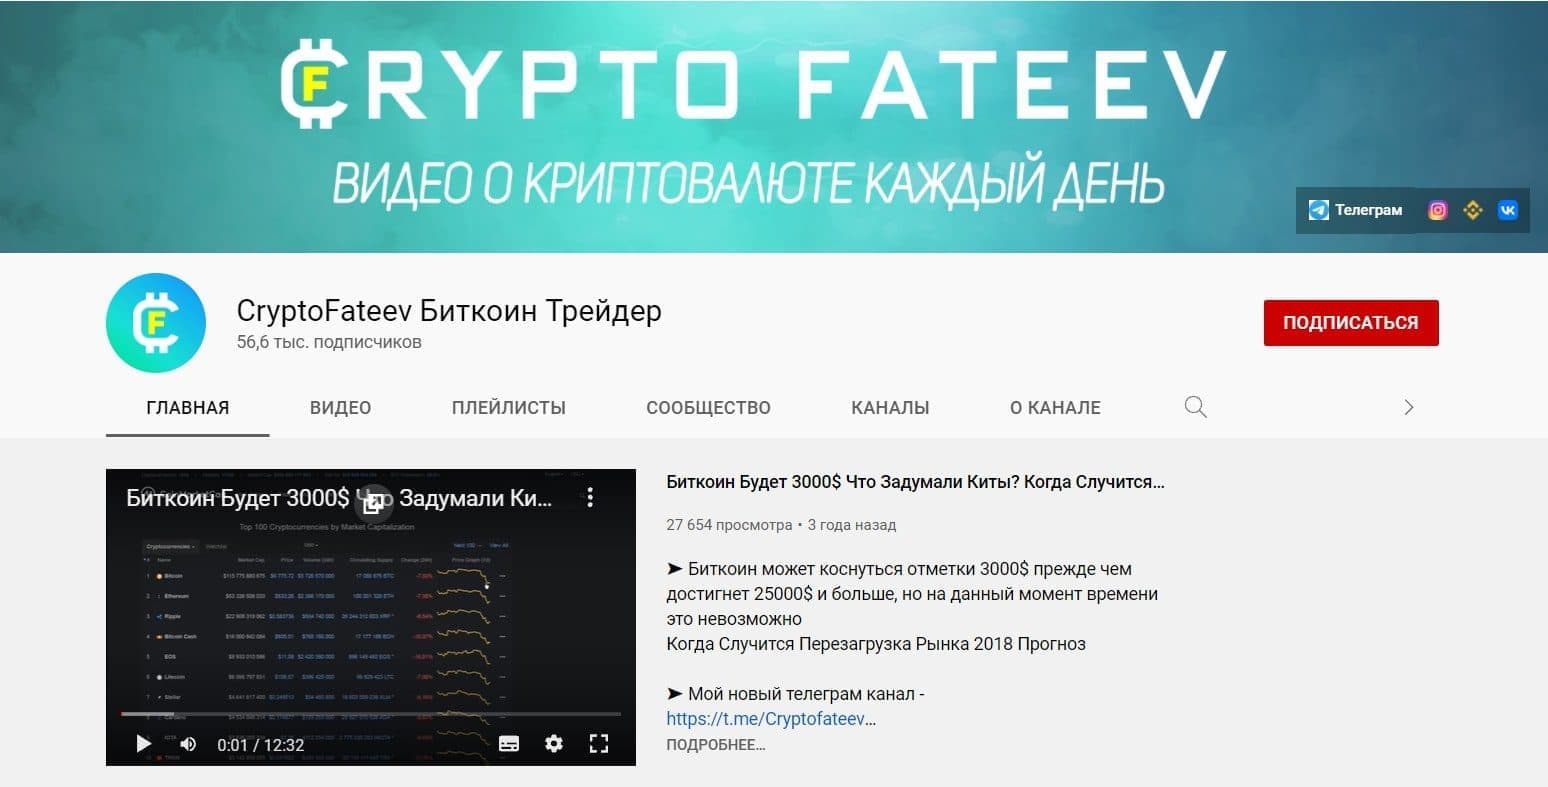 Ютуб канал Cryptofateev